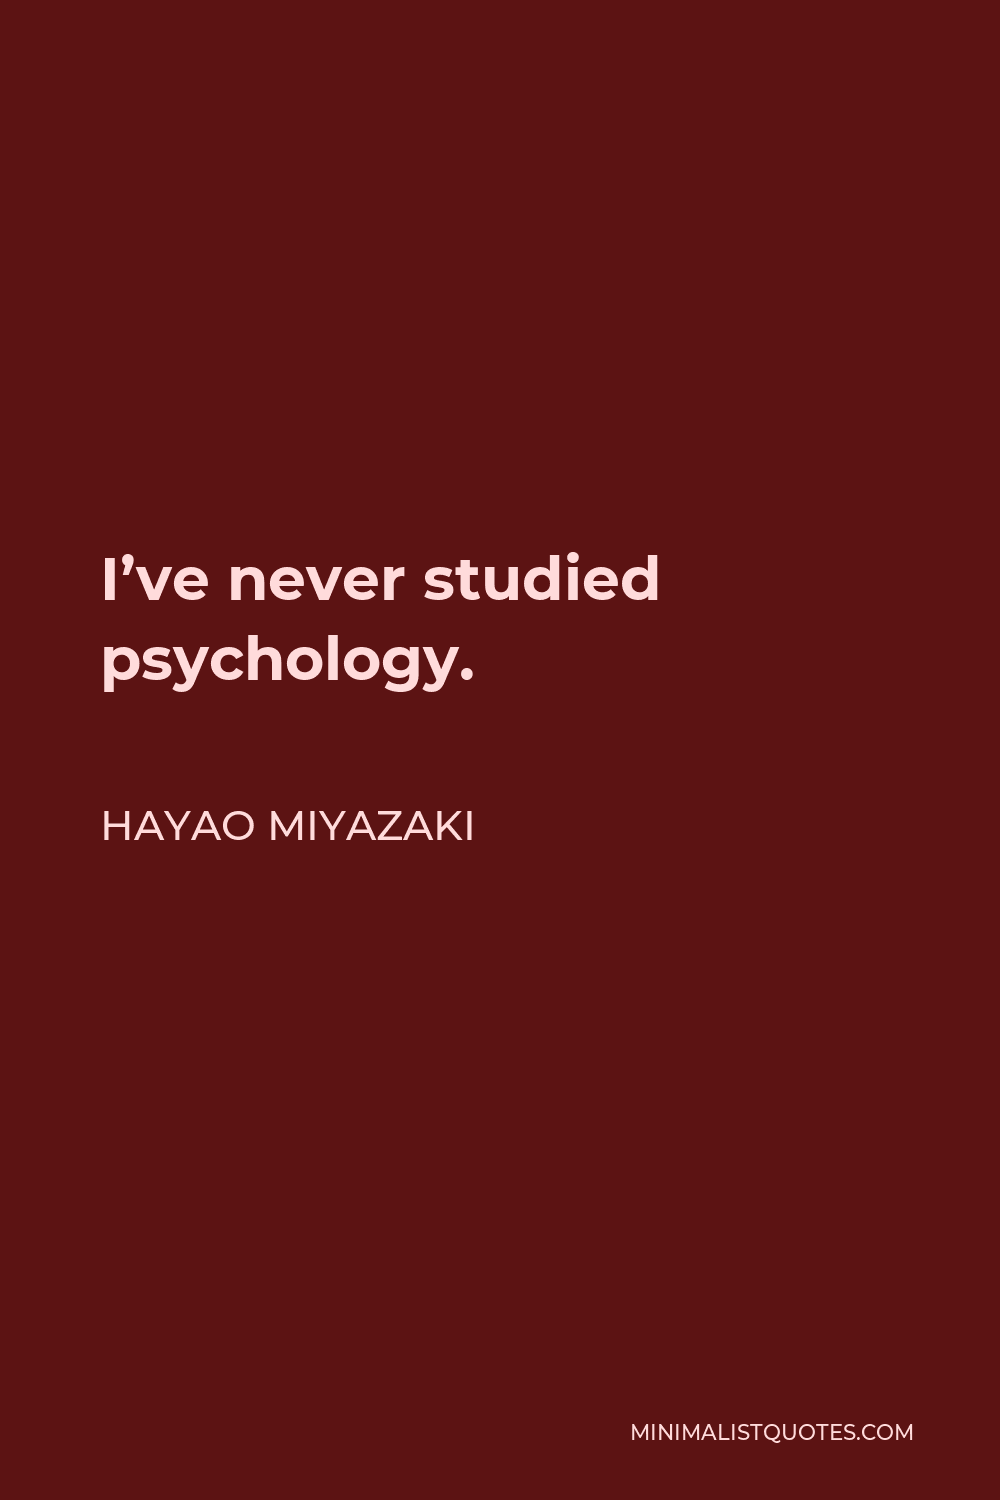 Hayao Miyazaki Quote - I’ve never studied psychology.